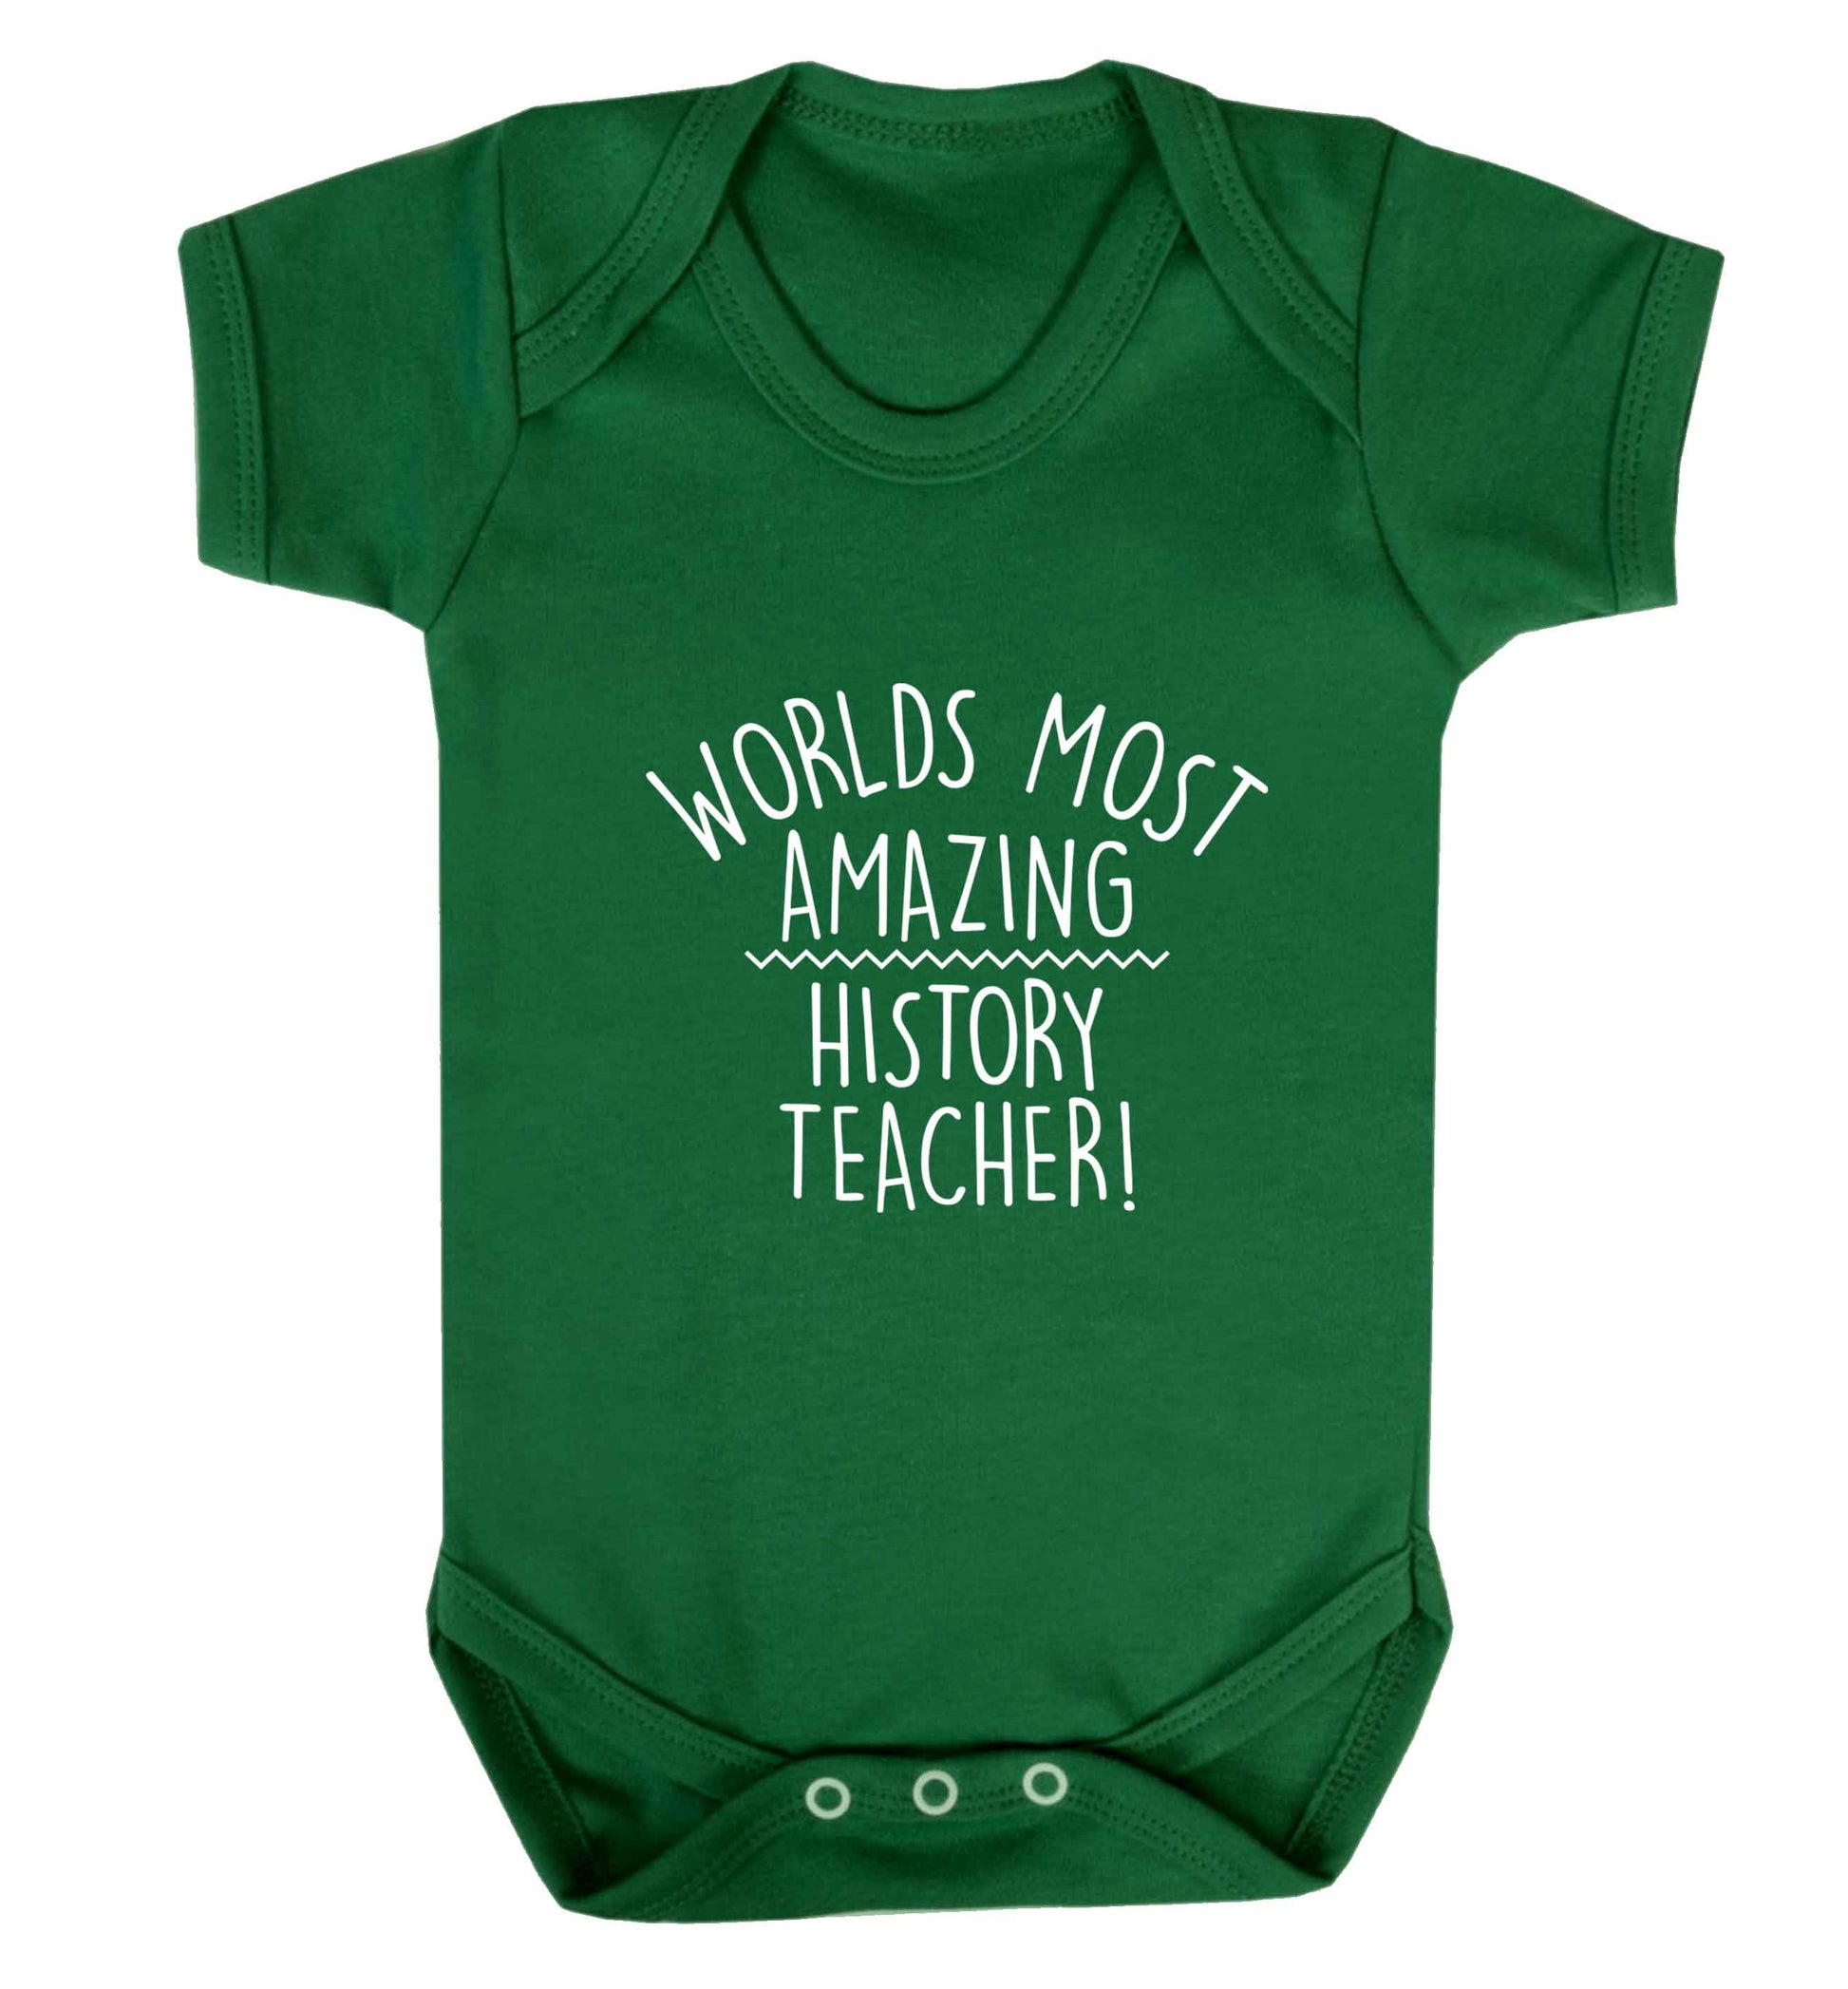 Worlds most amazing History teacher baby vest green 18-24 months